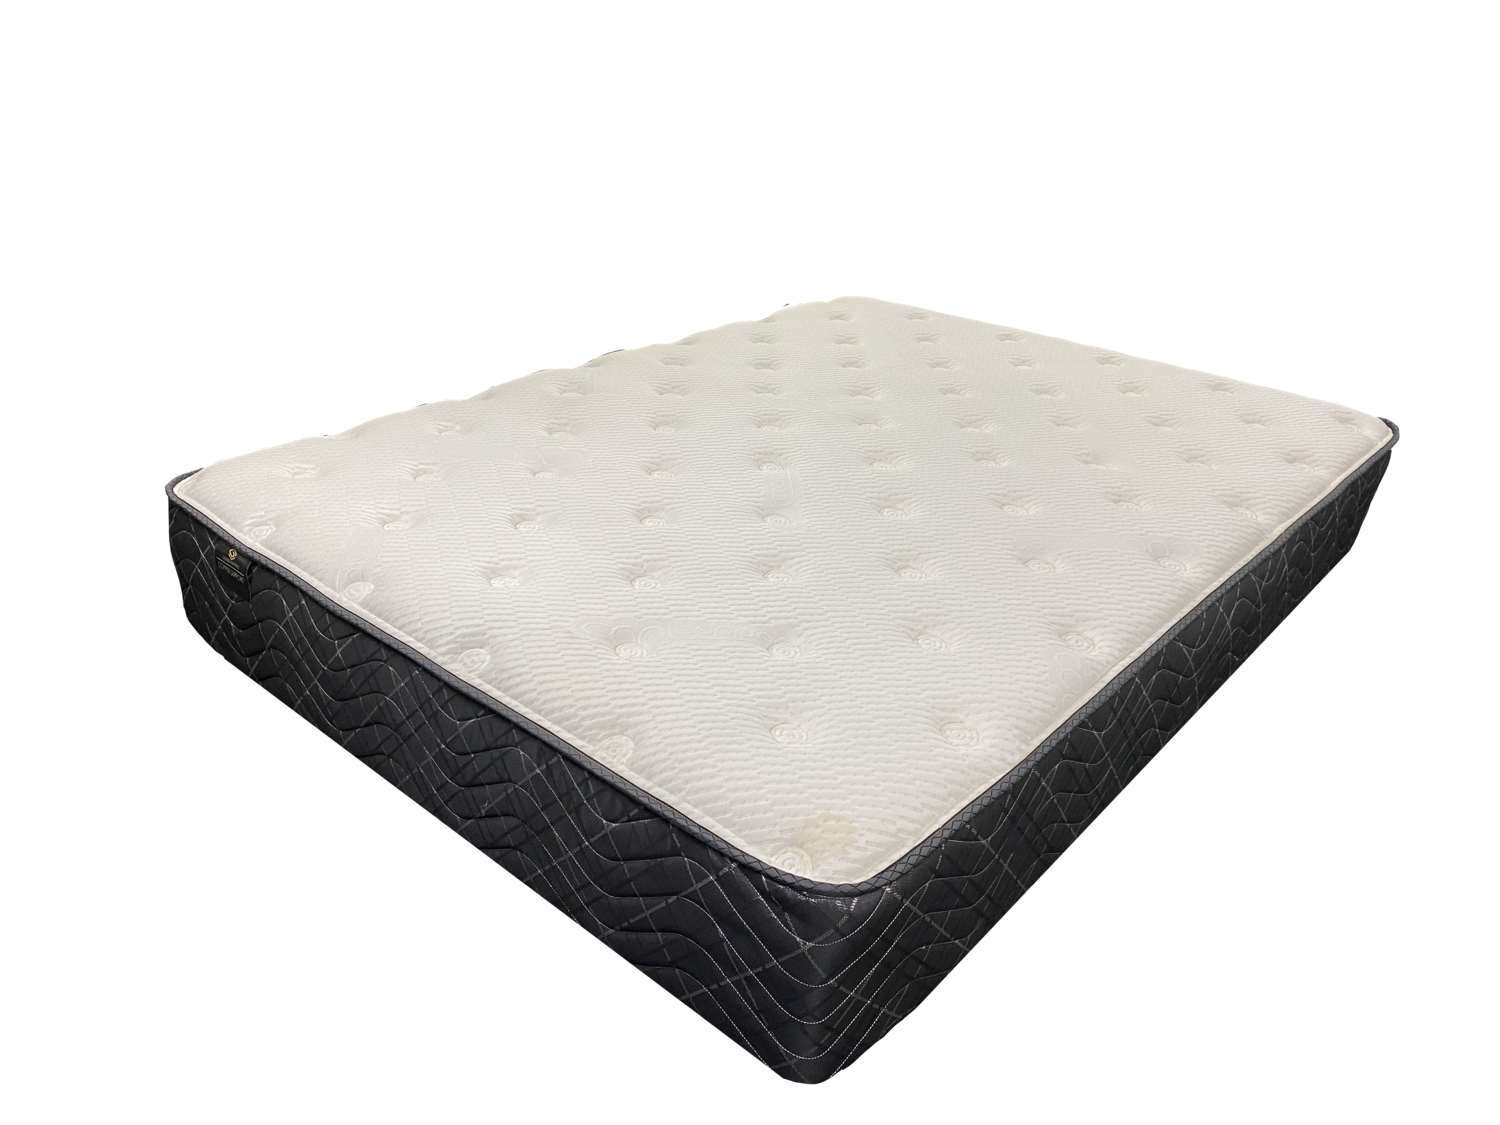 site saatvamattress.com plush mattress review